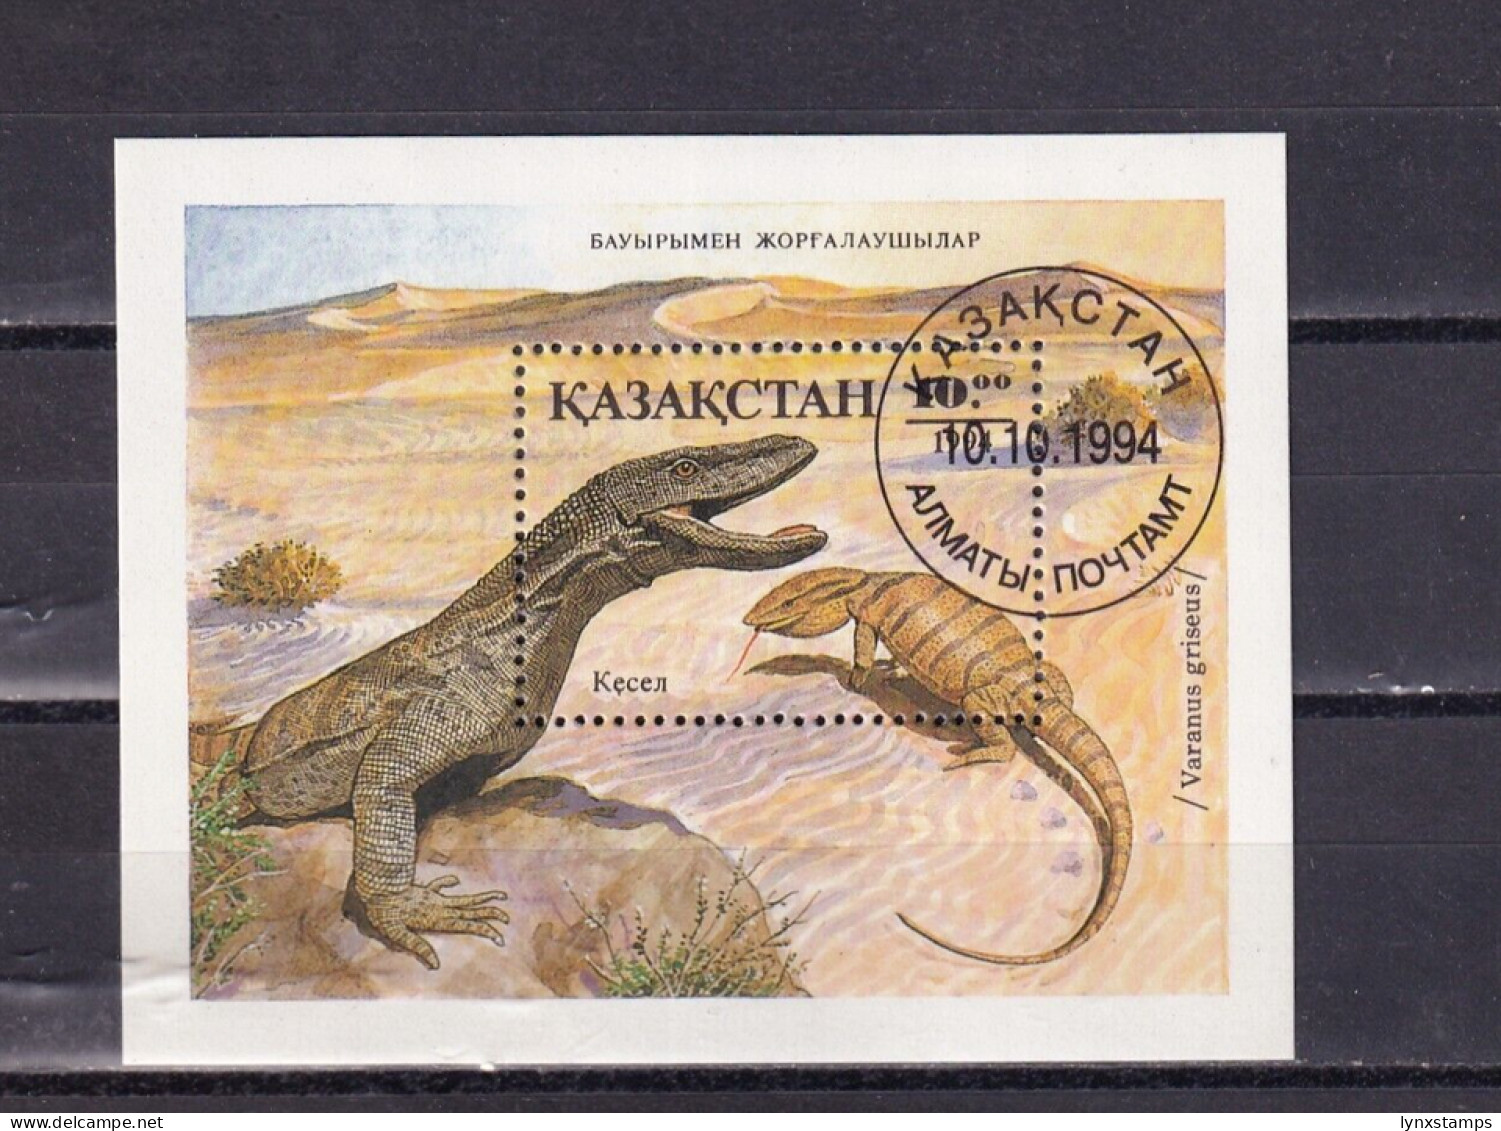 SA03 Kazakhstan 1994 Reptiles Used Minisheet - Kazakhstan